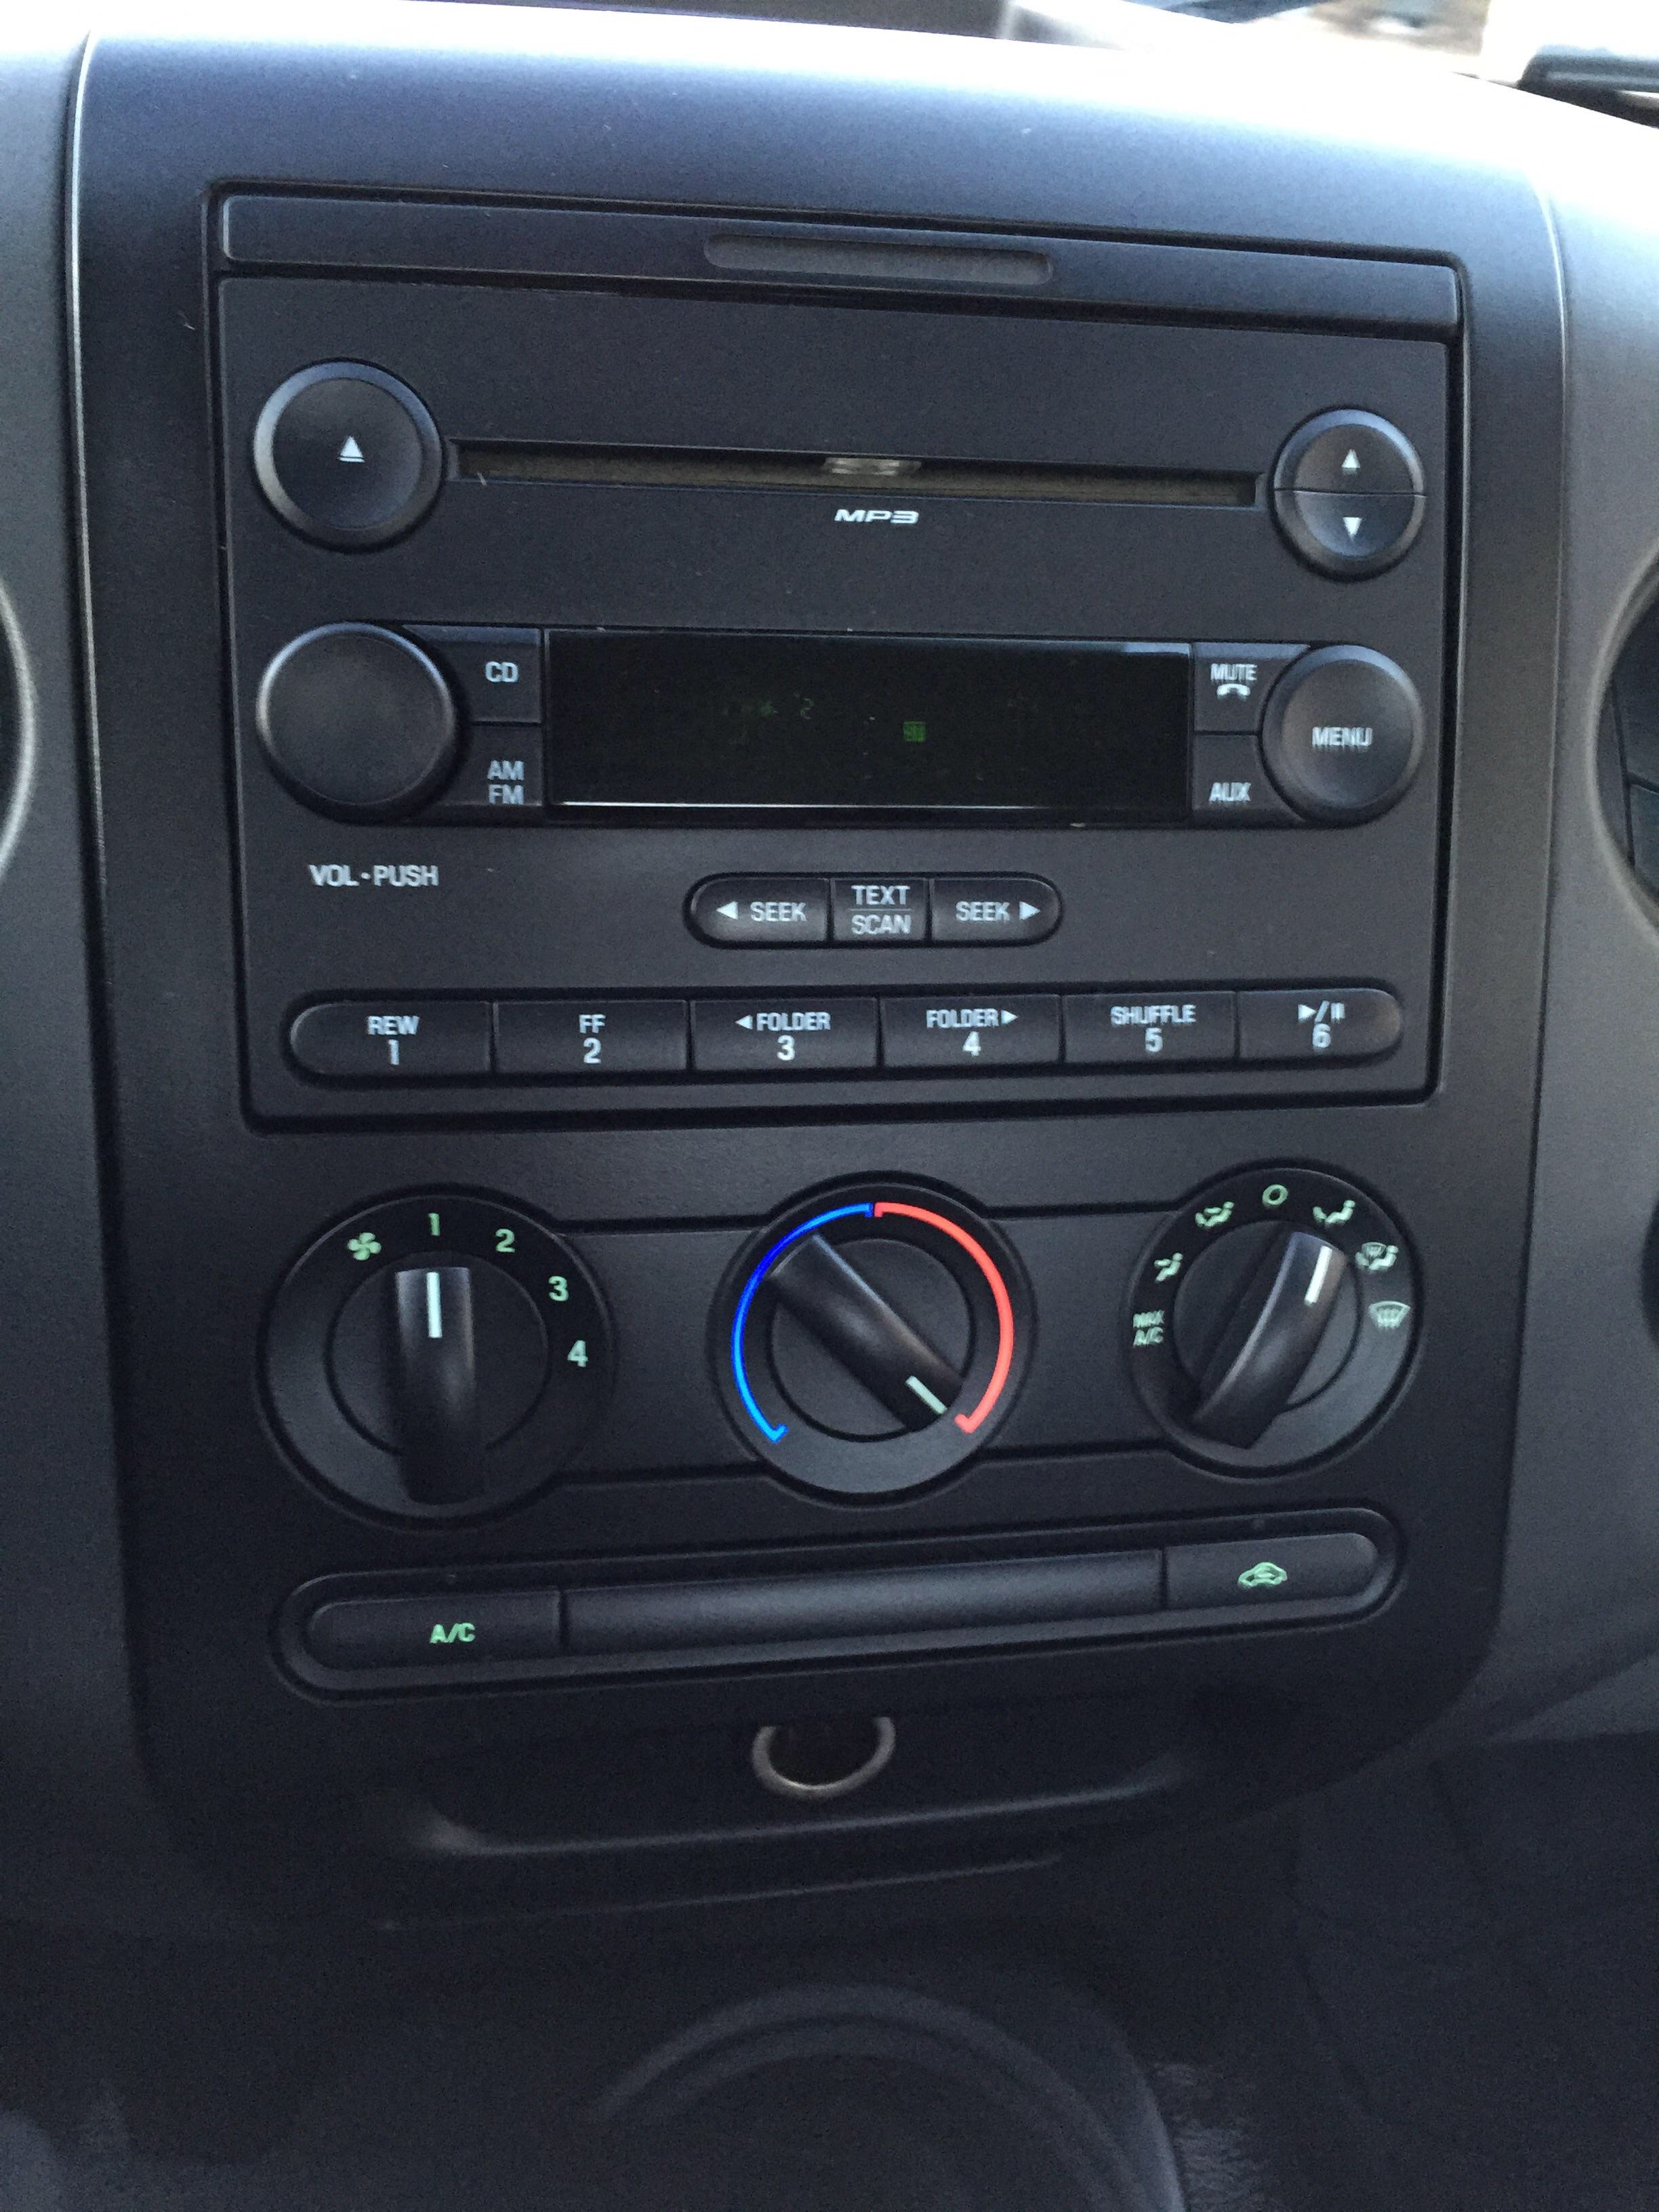 Restored 2006 Ford F-150 Pickup OEM AM FM Radio w Aux & Bluetooth